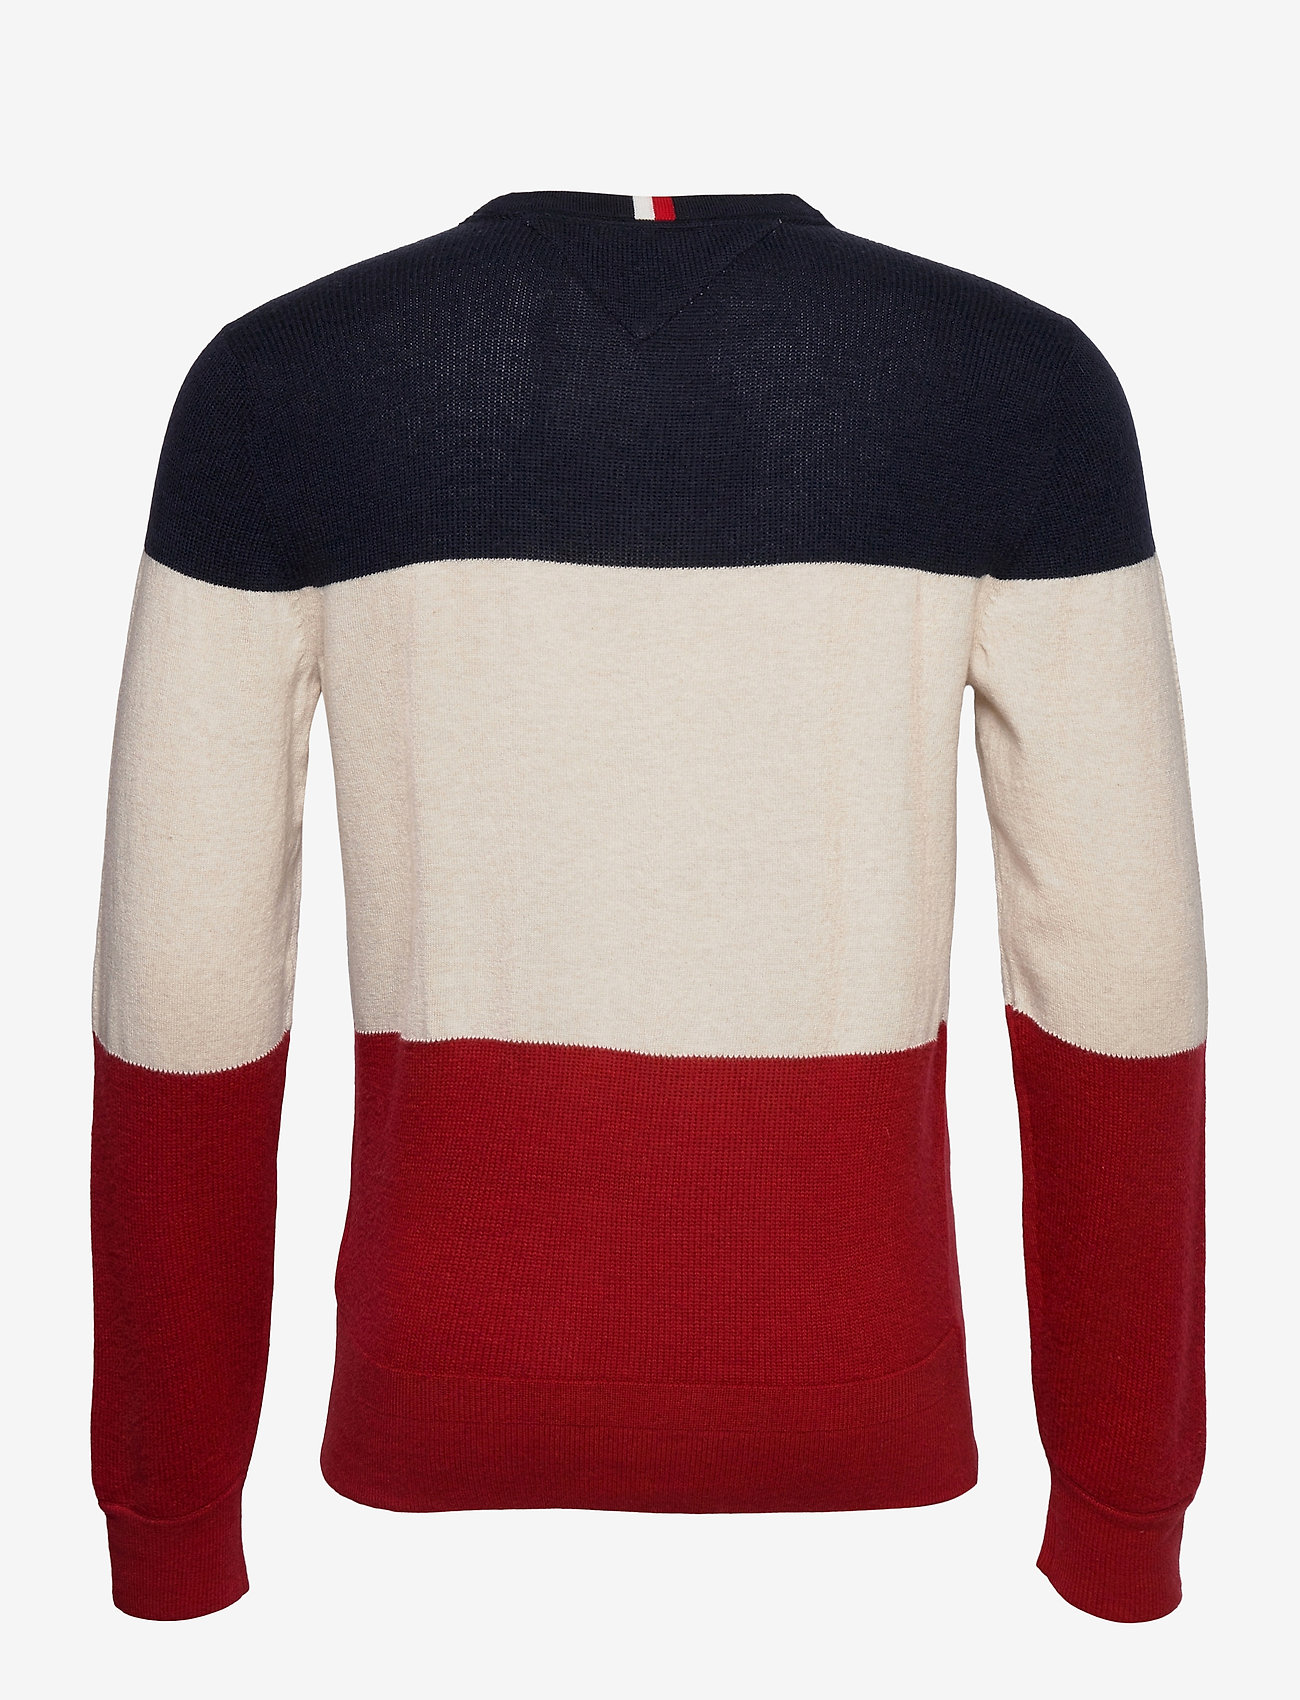 Color Block Sweater (Arizona Red) (64 